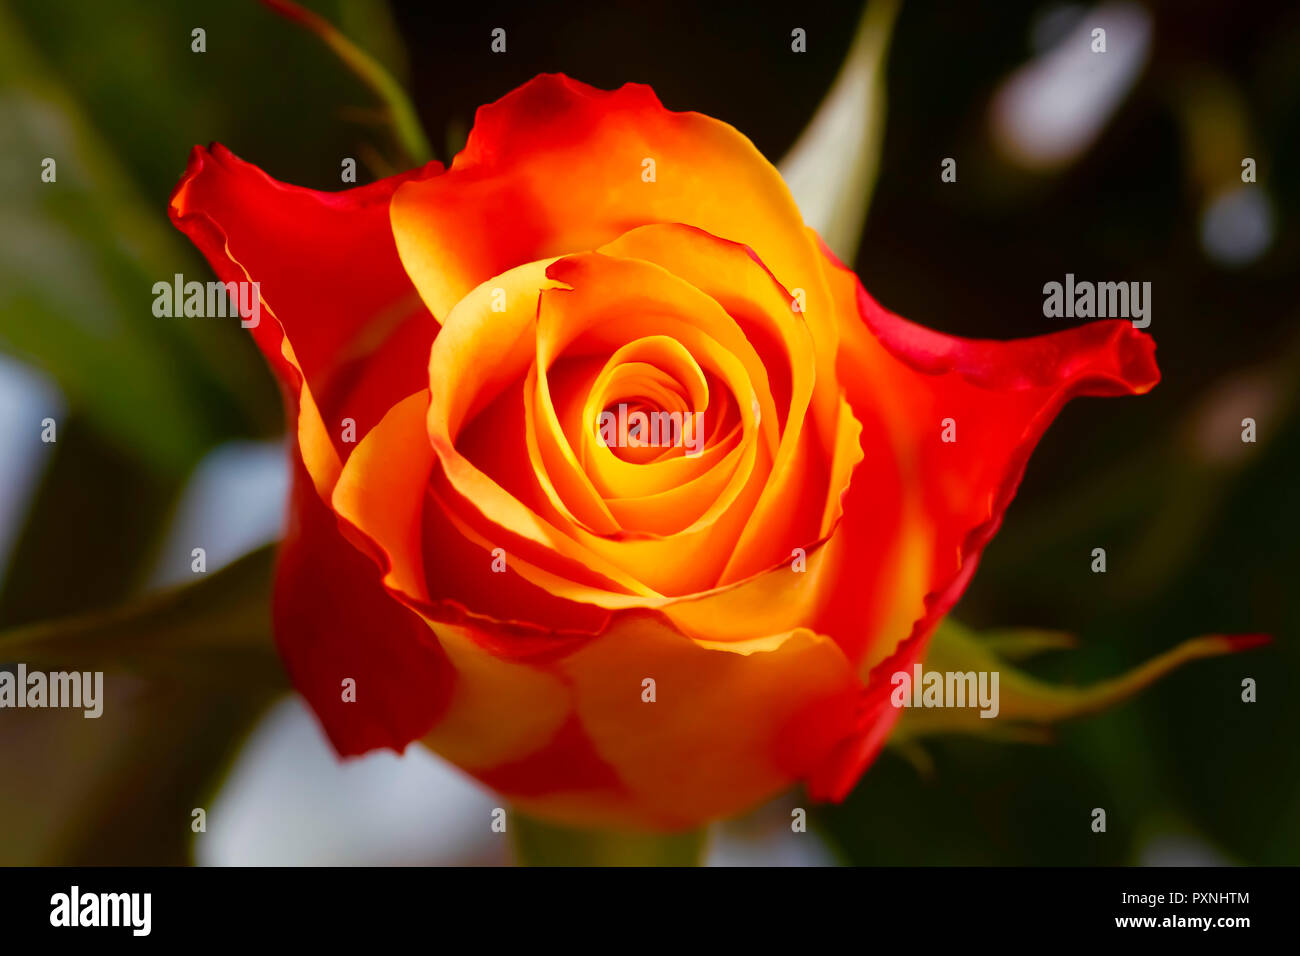 Red orange rose blossom, close-up Stock Photo